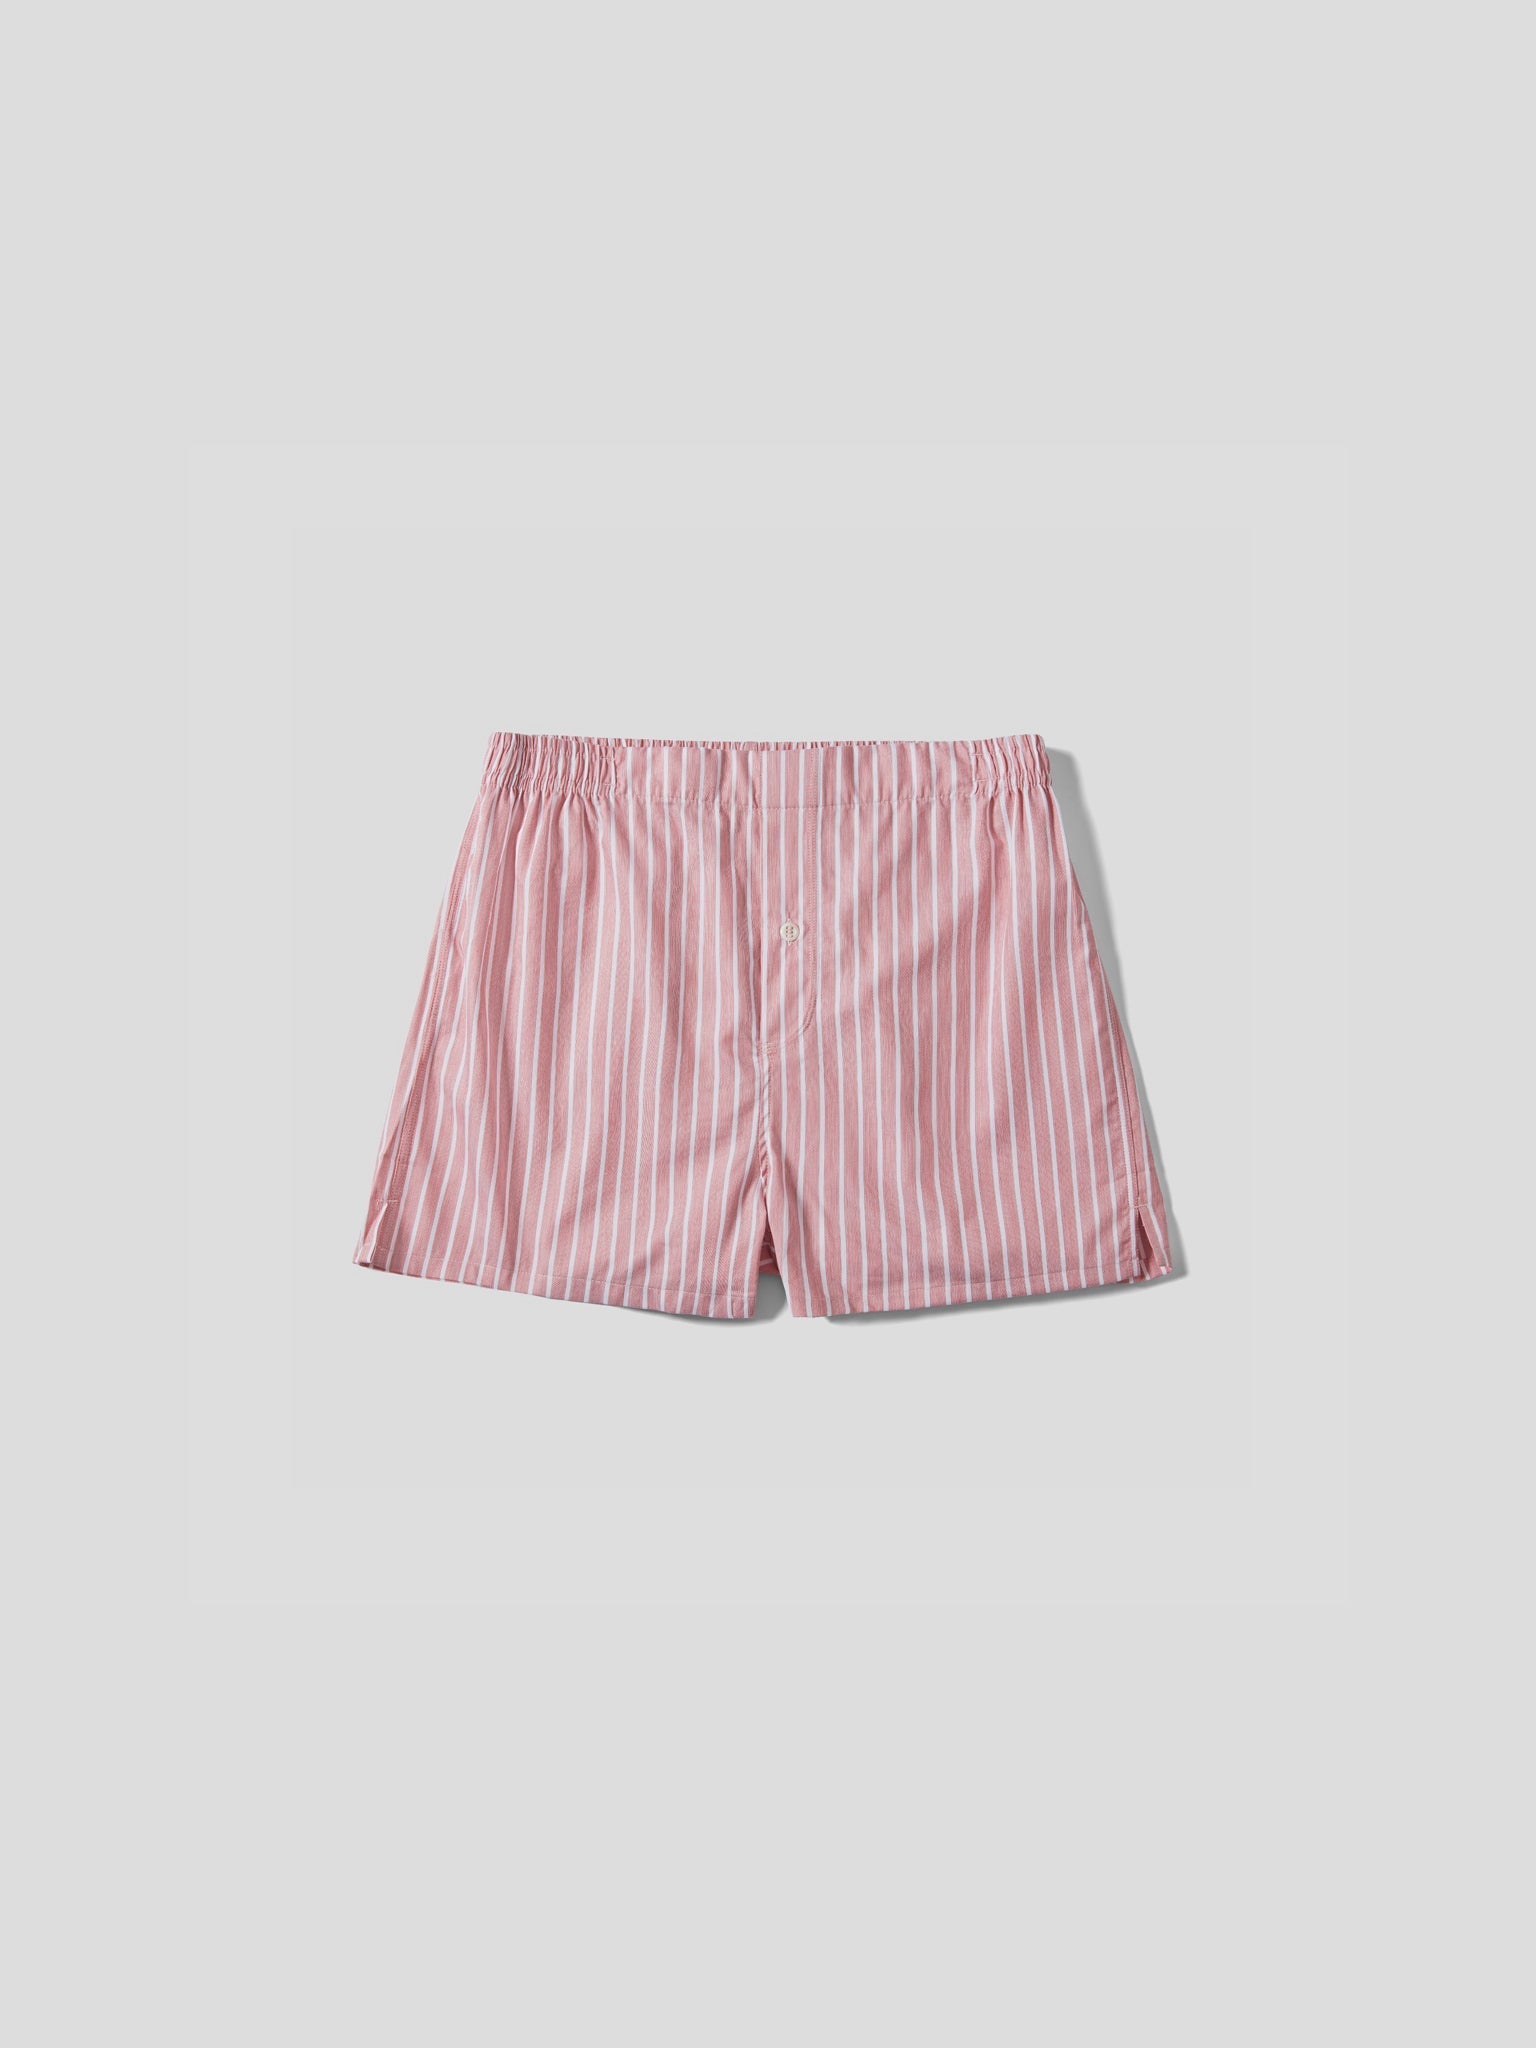 Cotton Boxer Shorts - PINK